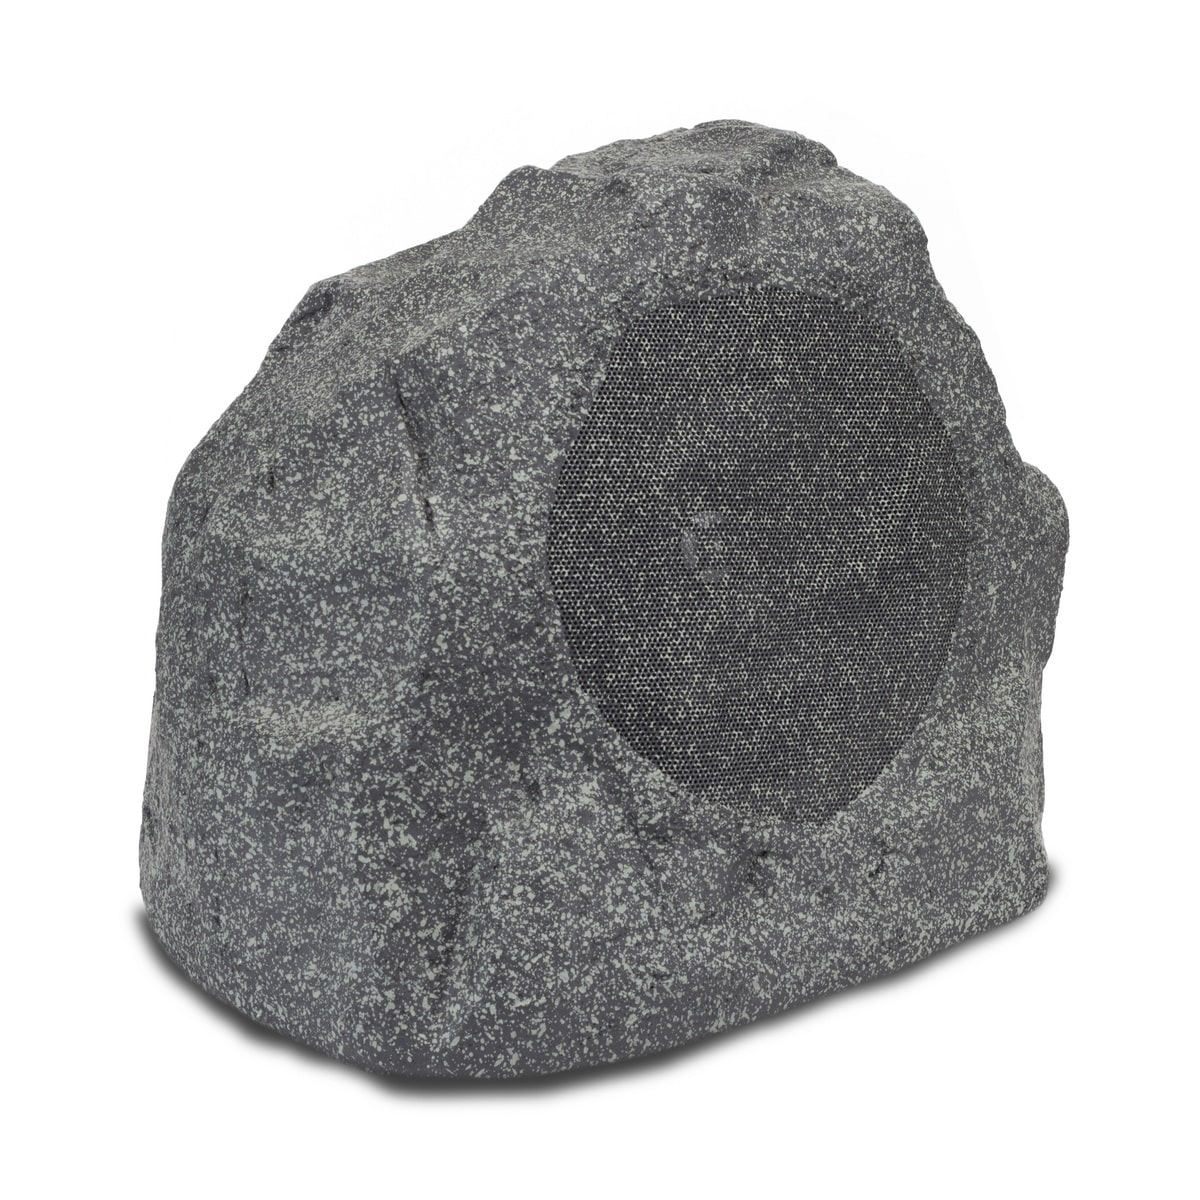 Ландшафтная акустика Klipsch PRO-650T-RK Granite ландшафтный сабвуфер klipsch pro 10sw rk granite